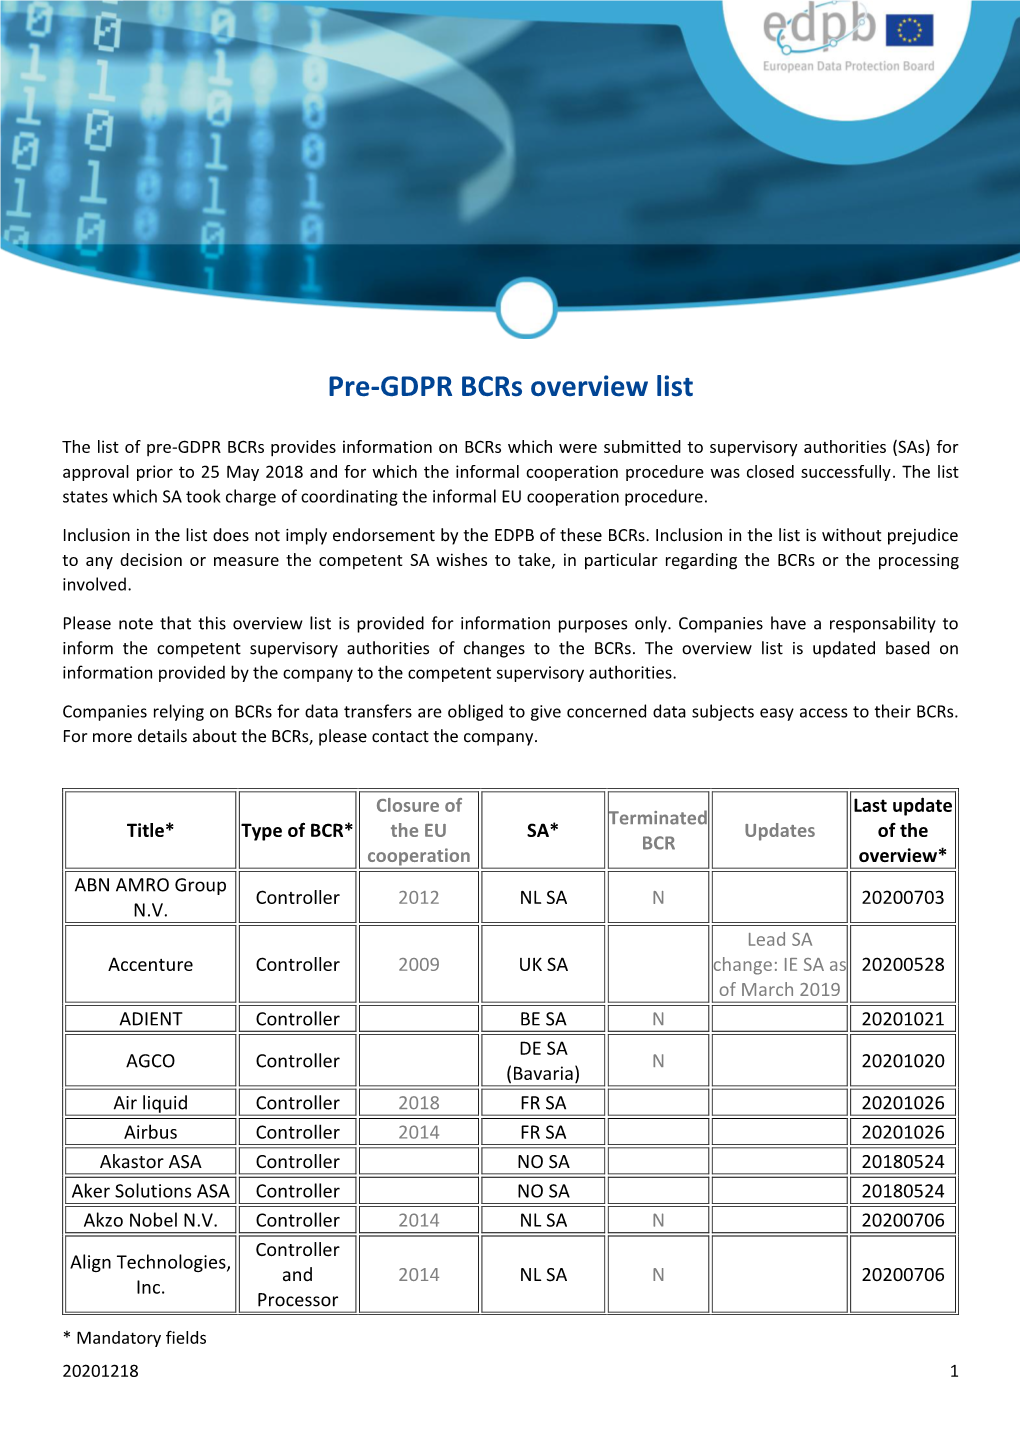 Pre-GDPR Bcrs Overview List